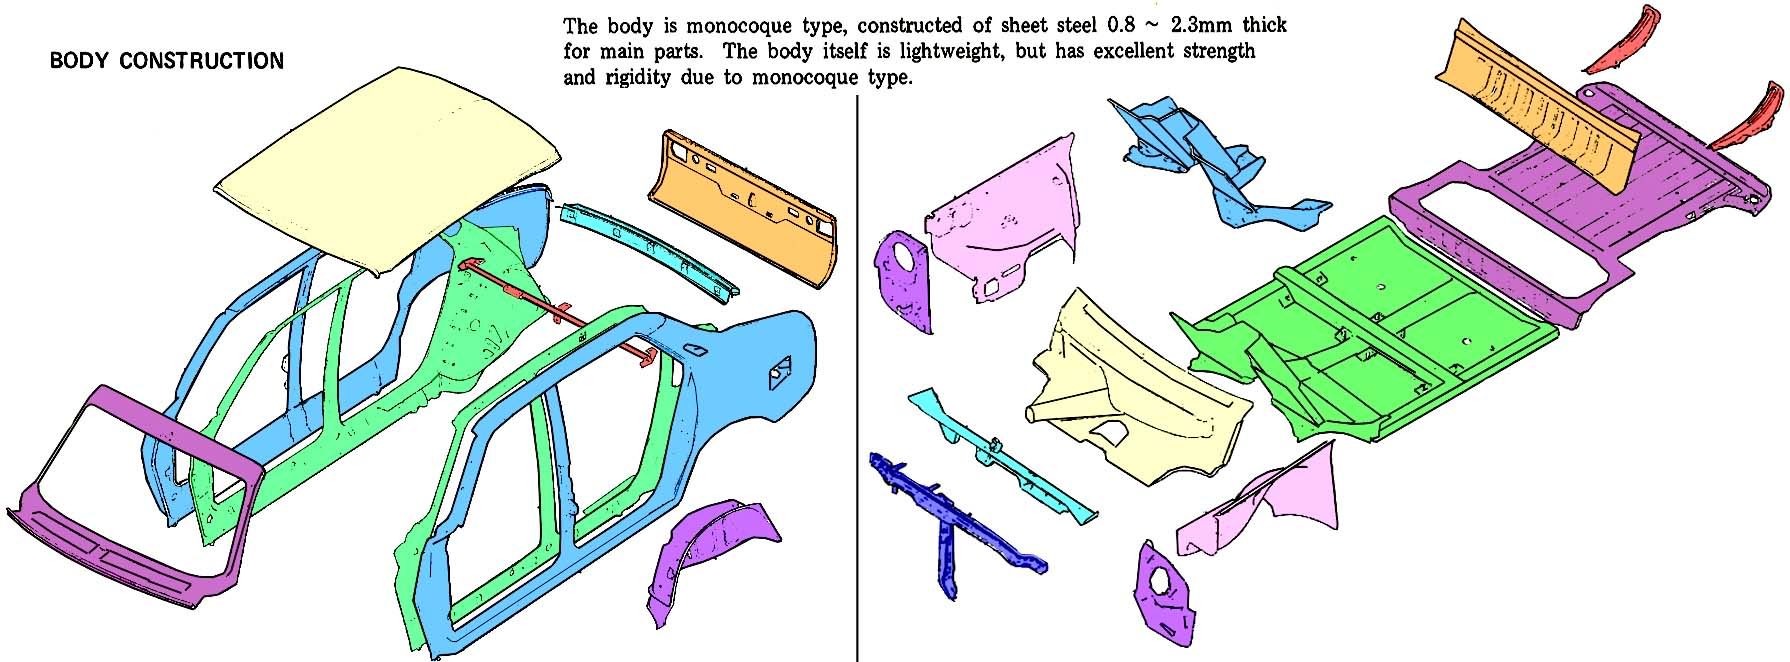 bodyconstruction.jpg